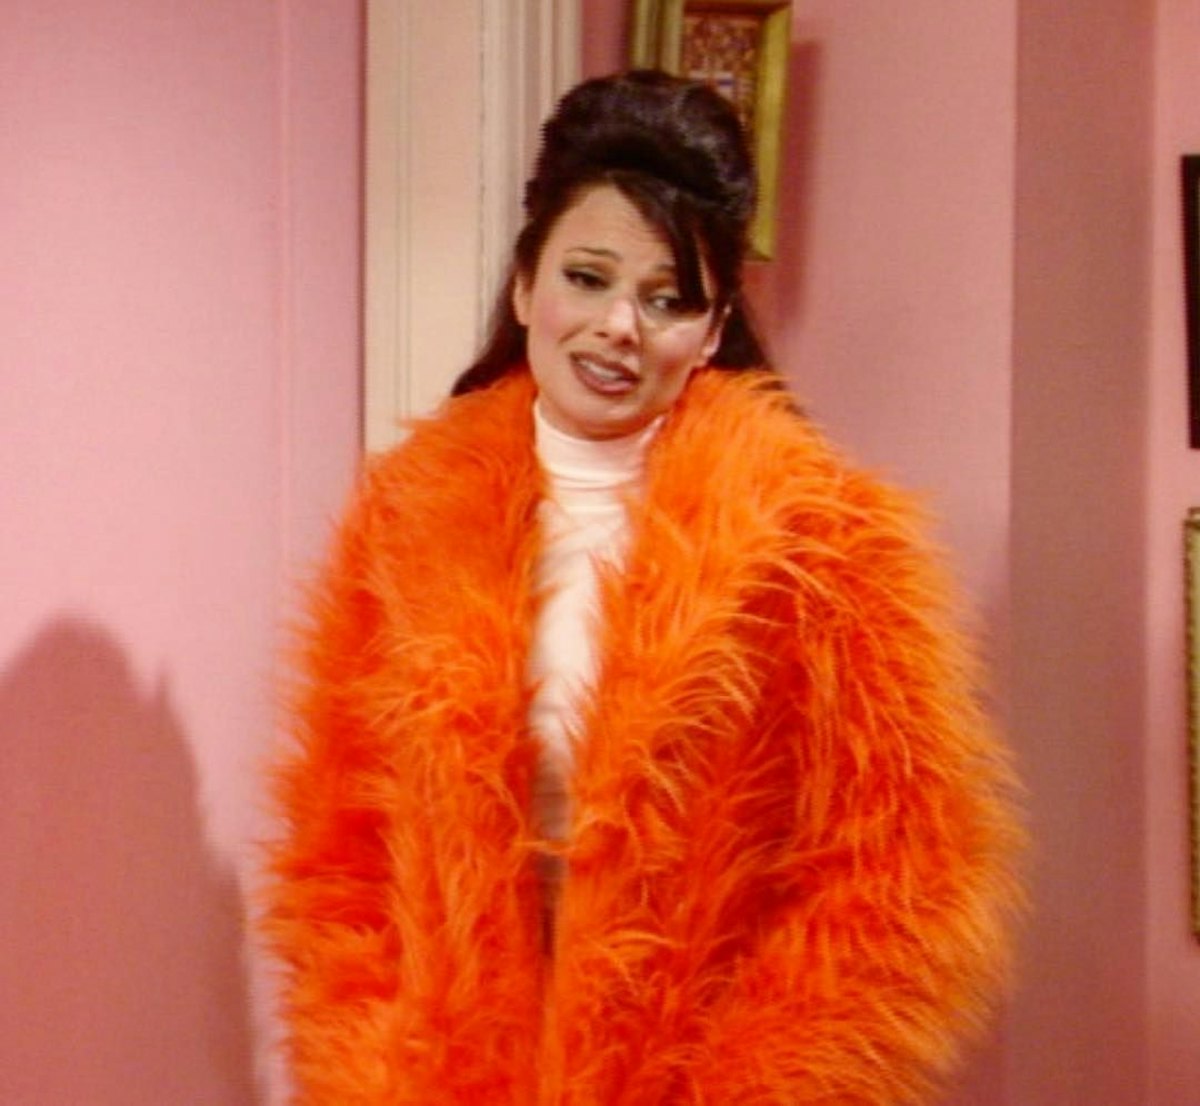 Nanny's Fran Fine wearing a bright orange fur coat, designed by costume designer Brenda Cooper